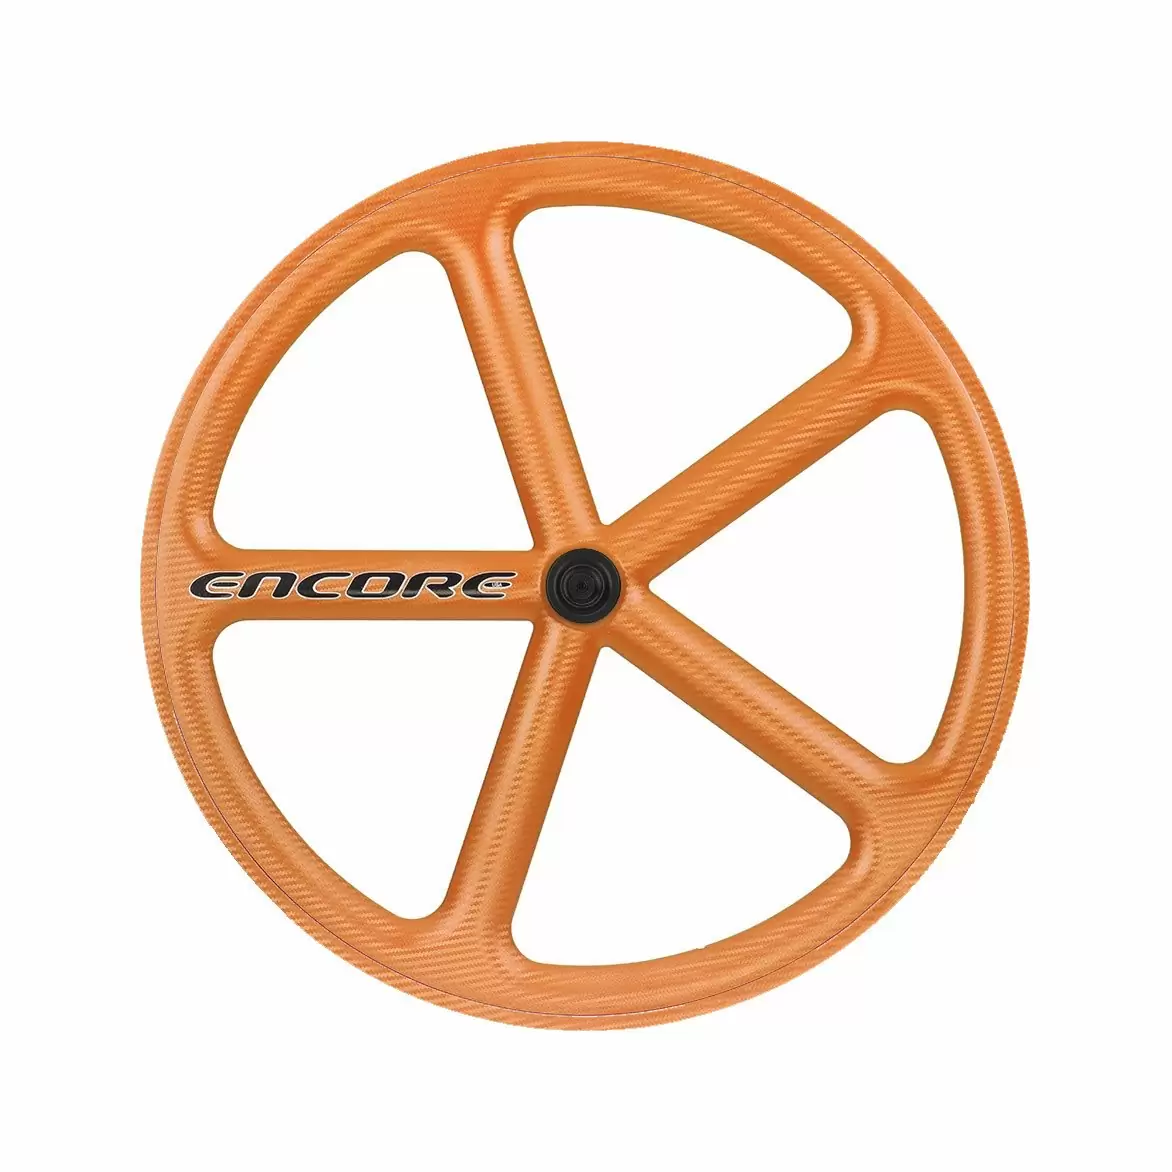 roda traseira 700c track 5 raios fibra de carbono laranja nmsw - image